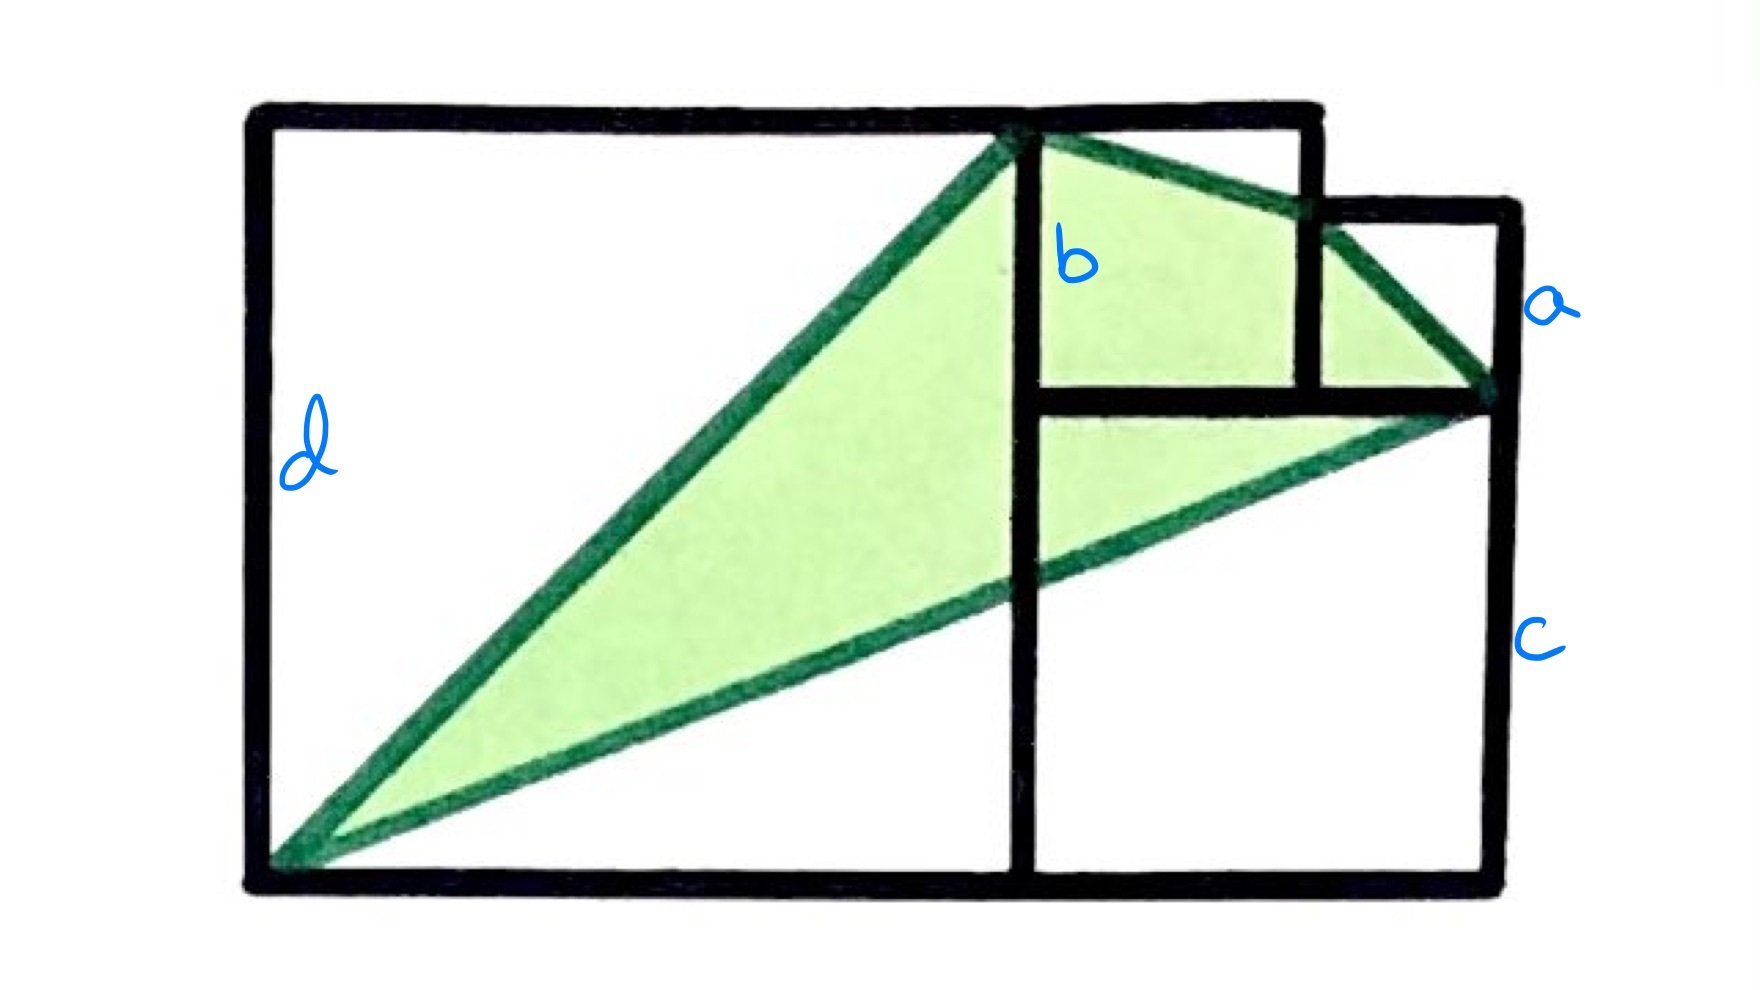 Four Squares VII labelled